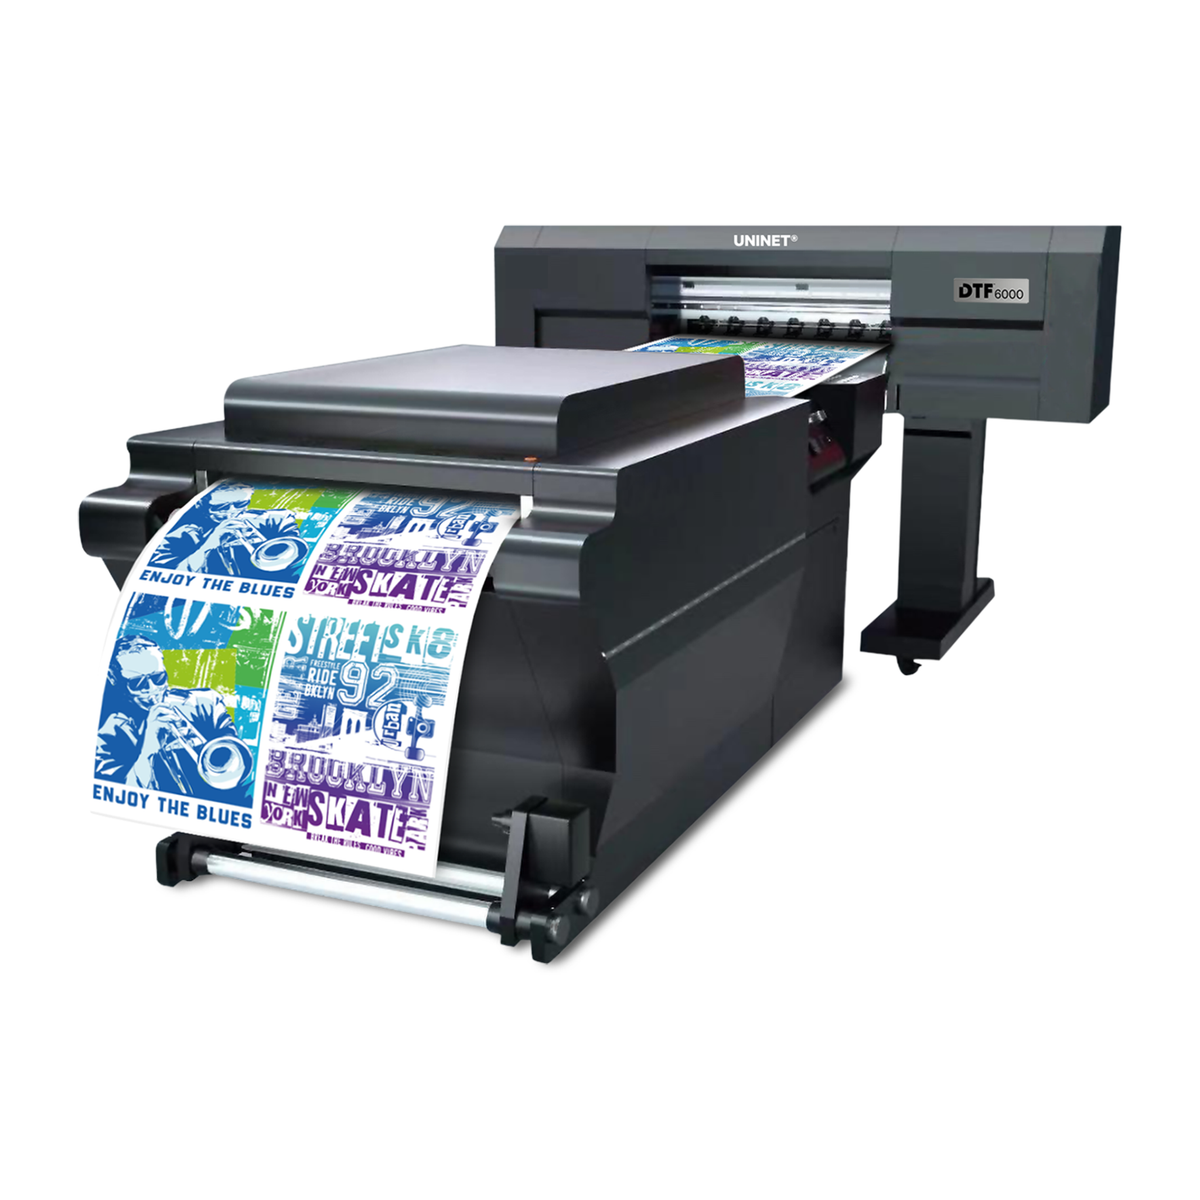 DTF 6000 Printer